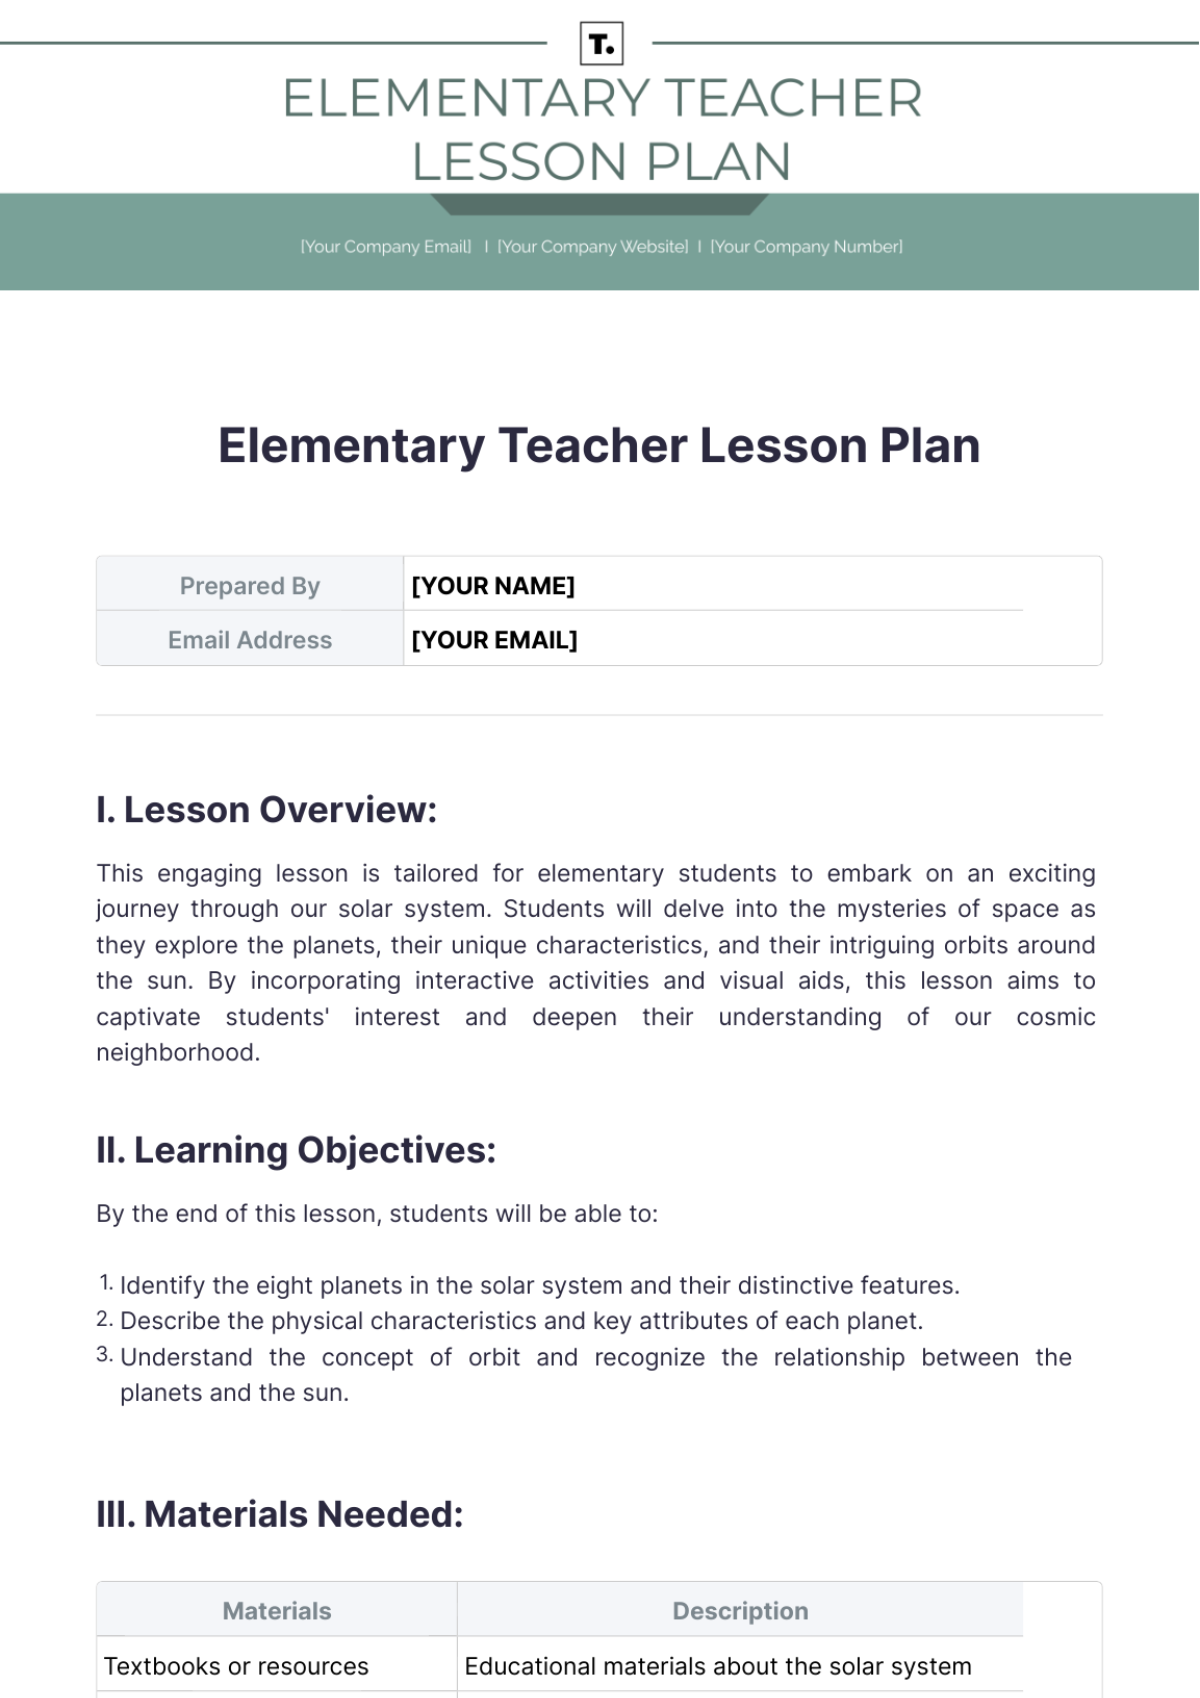 Elementary Teacher Lesson Plan Template